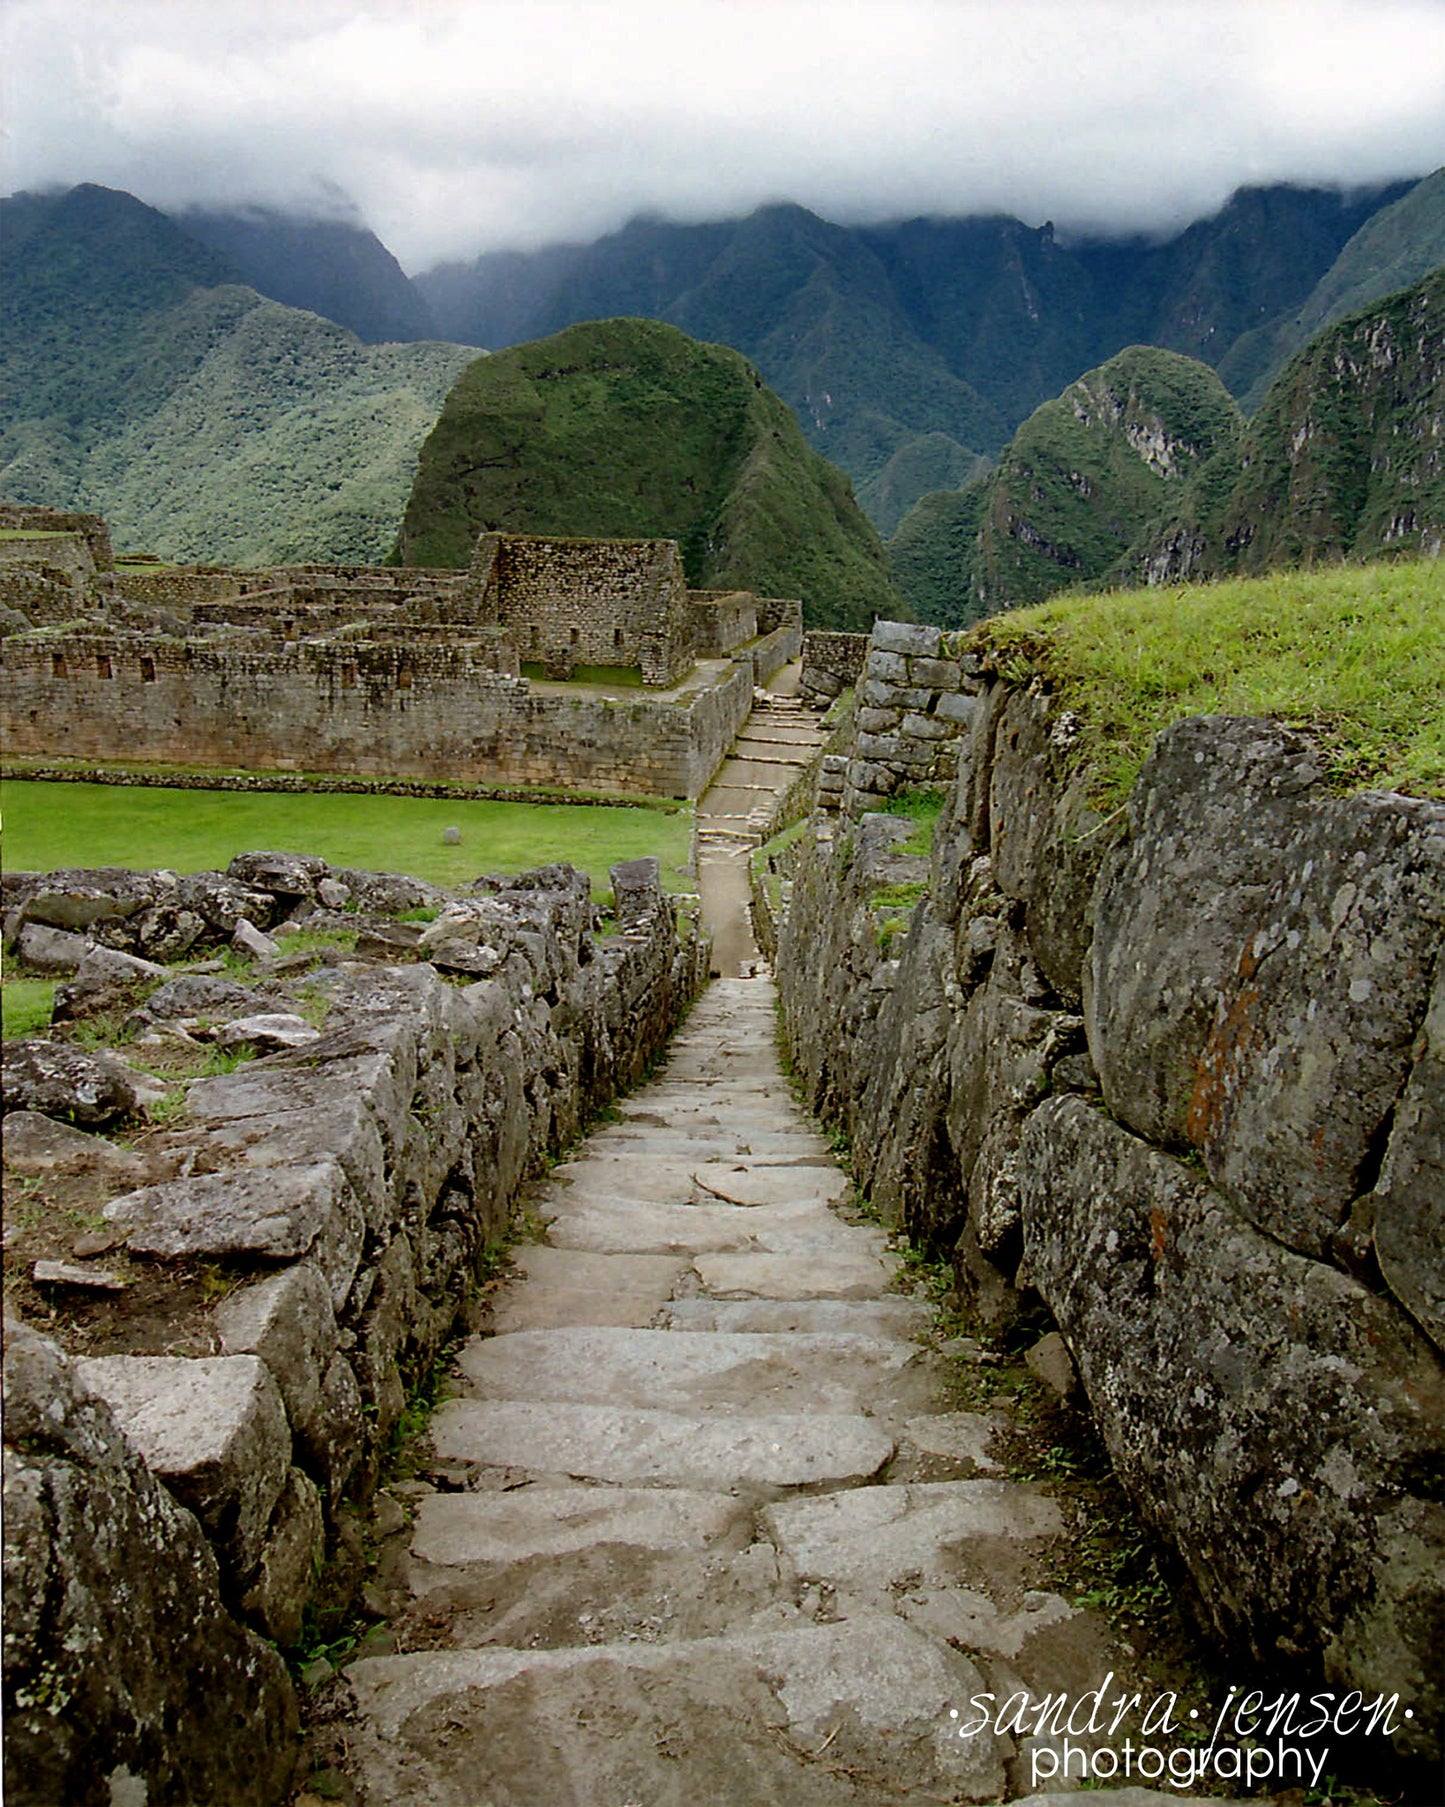 Print - Machu Picchu "Pathway"